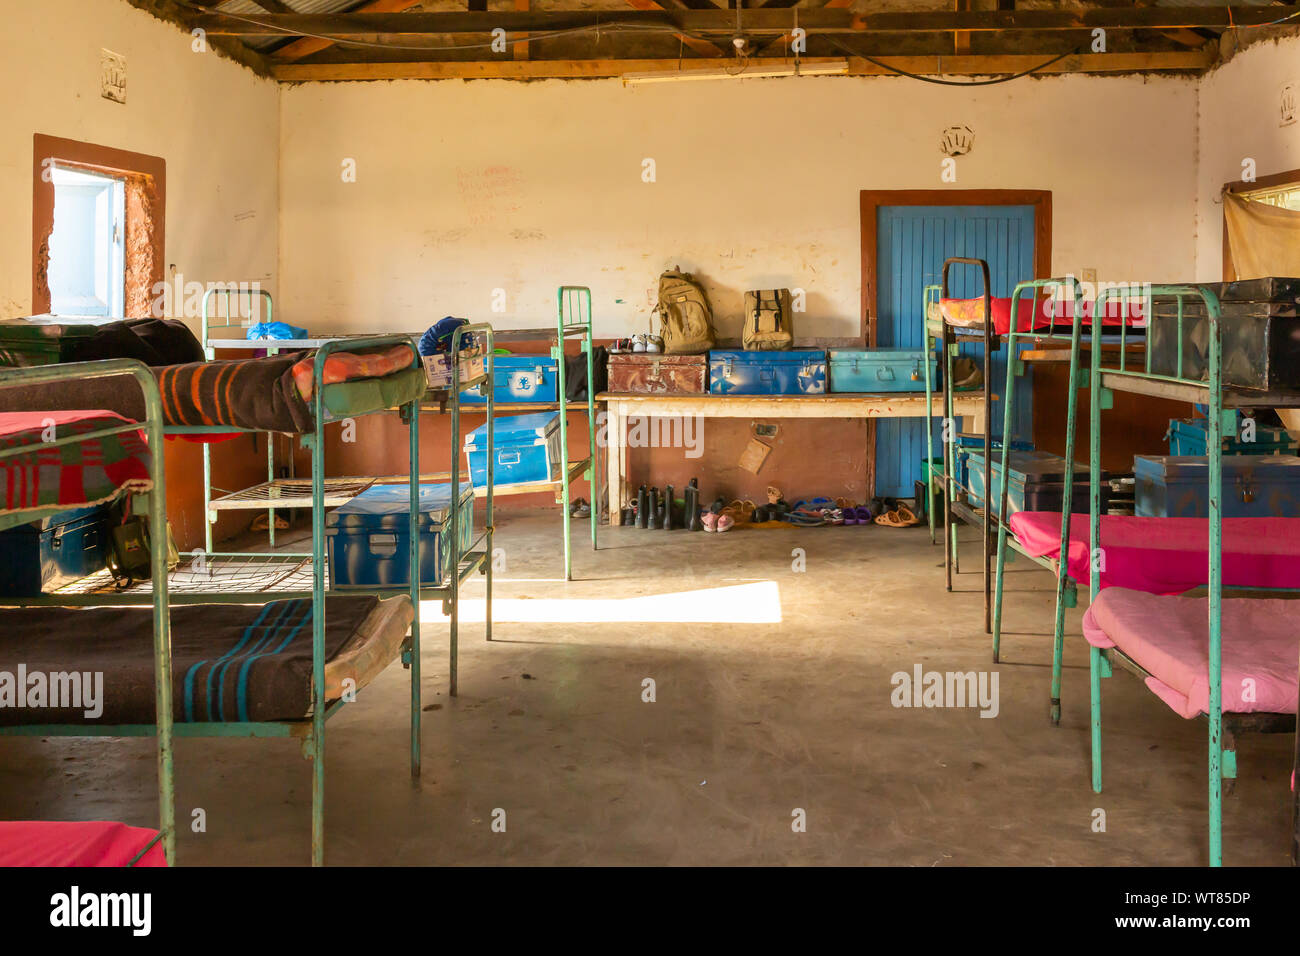 Imani Junior Academy, Nanyuki, Laikipia county, Kenya – June 13th, 2019: Photograph of girls dormitories at Imani Junior School, in Kenya with no peop Stock Photo